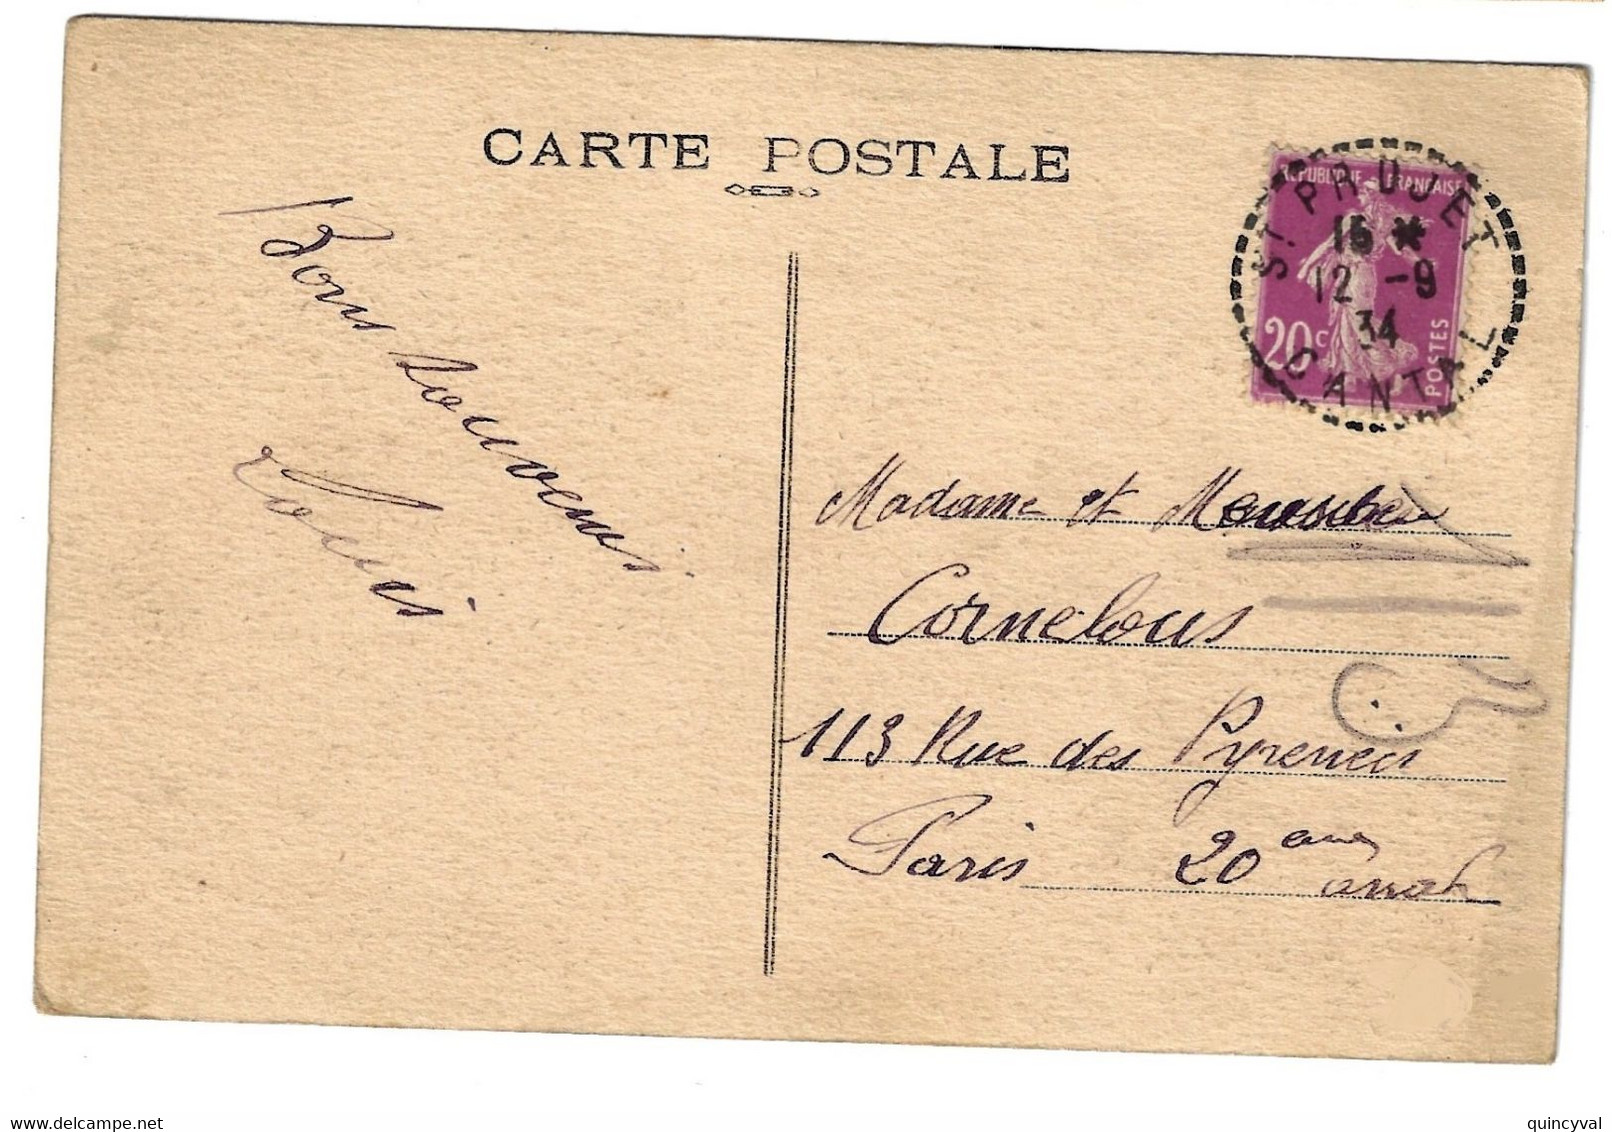 St PRUJET Cantal Carte Postale 20c Semeuse Yv 190 Ob 12 9 1934 Pointillé FB04 Lautier B4 - Handstempels